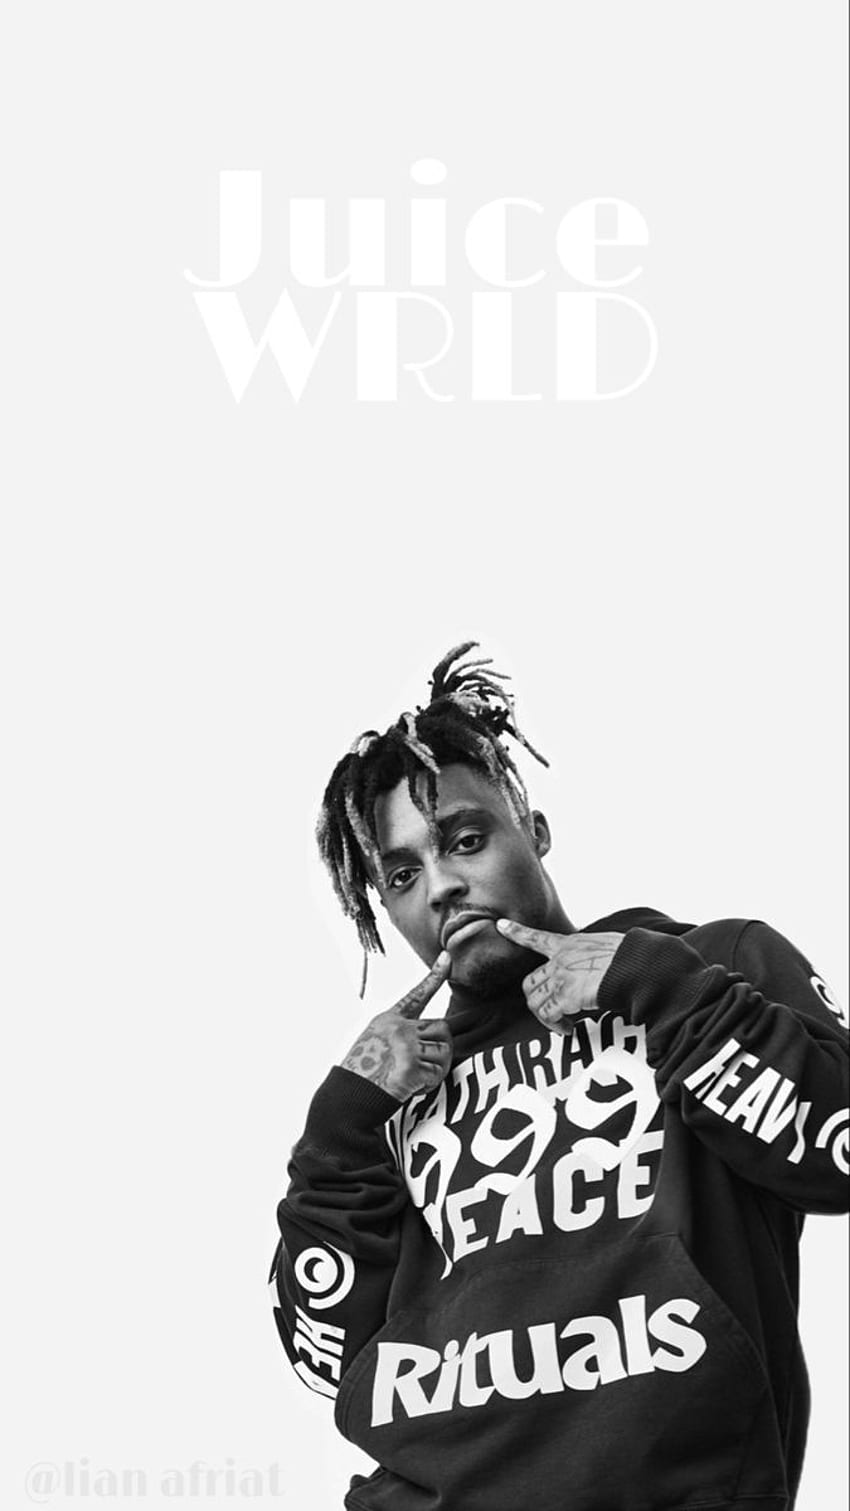 Juice Wrld Wallpaper 4K, Black background, American rapper